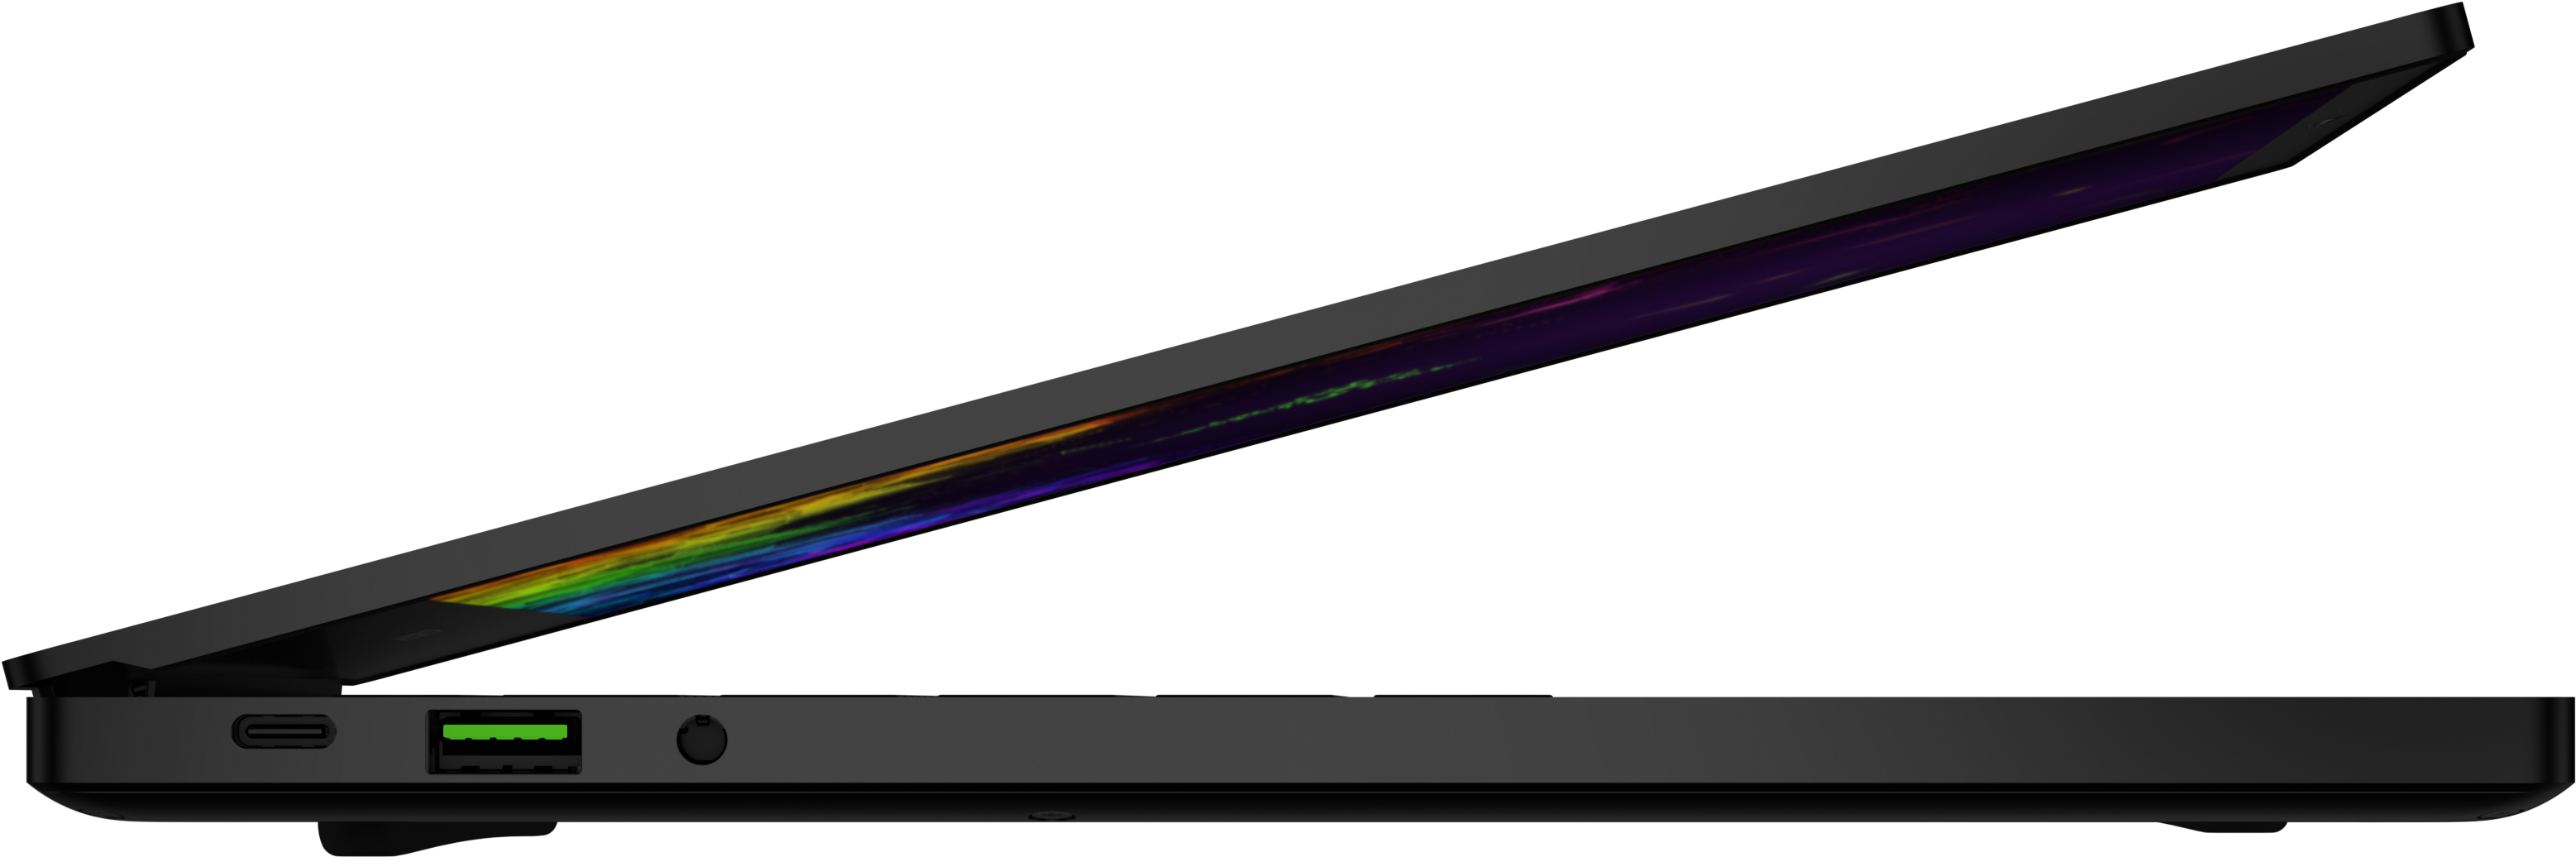 Razer Blade Laptop Side View PNG image